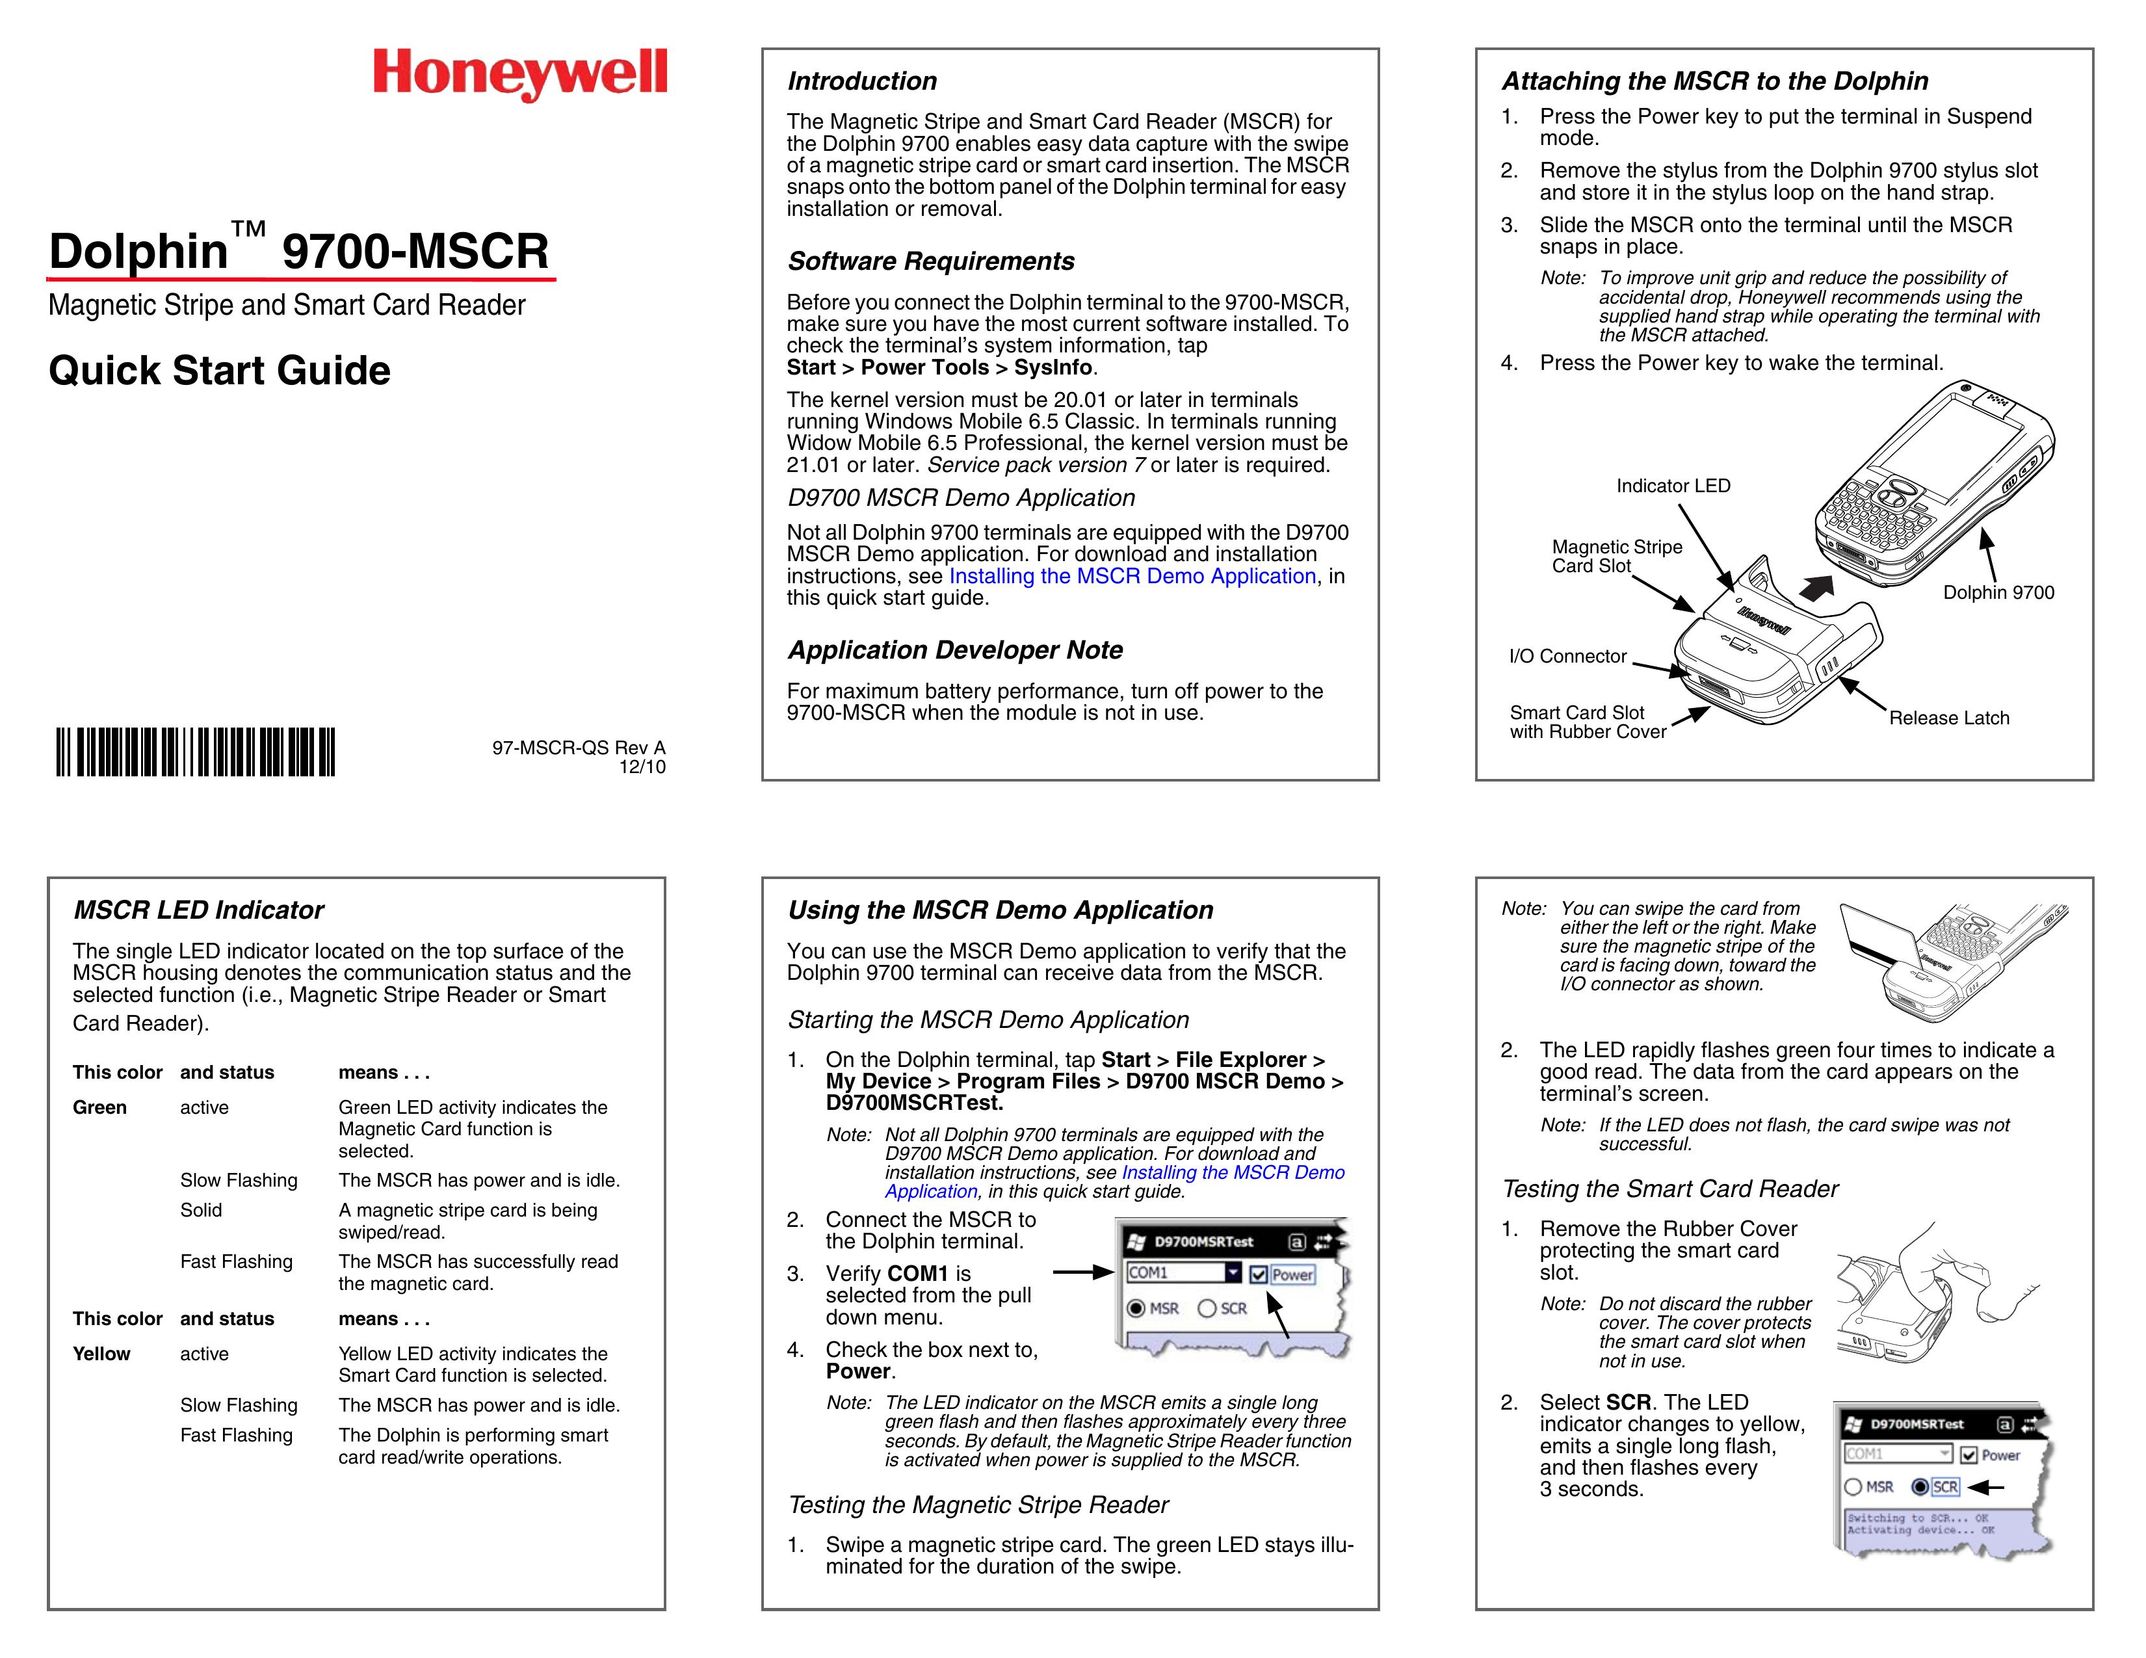 Honeywell 9700-MSCR Cell Phone User Manual